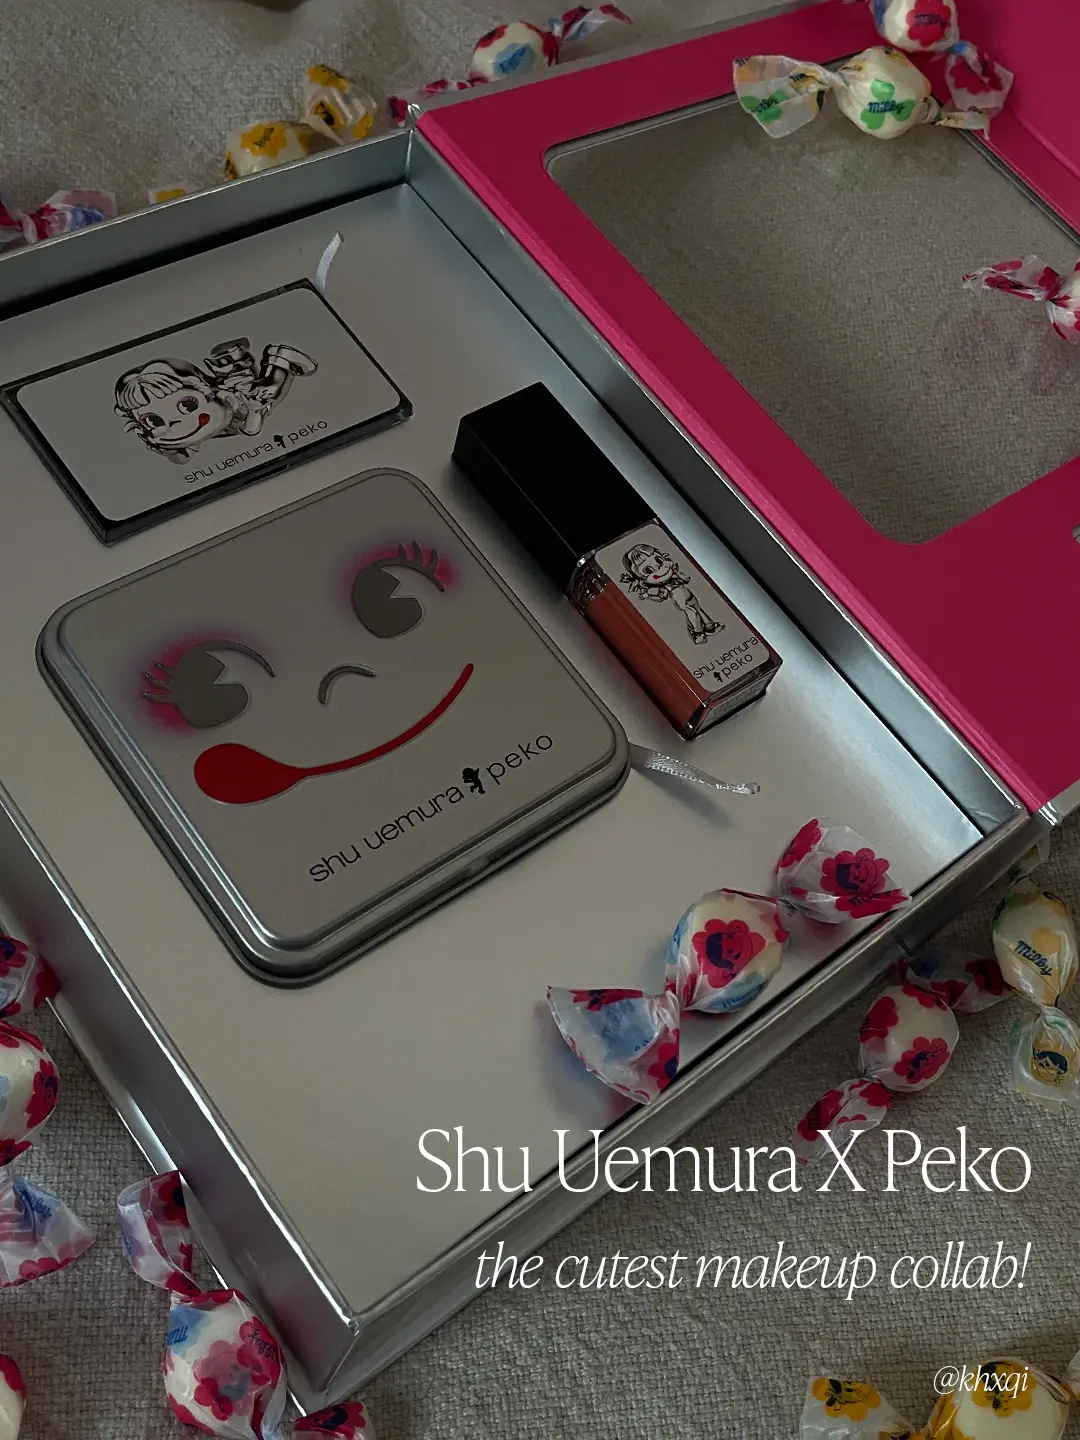 shu uemura x peko 🍡 — cutest makeup collab ever 🍬's images(0)